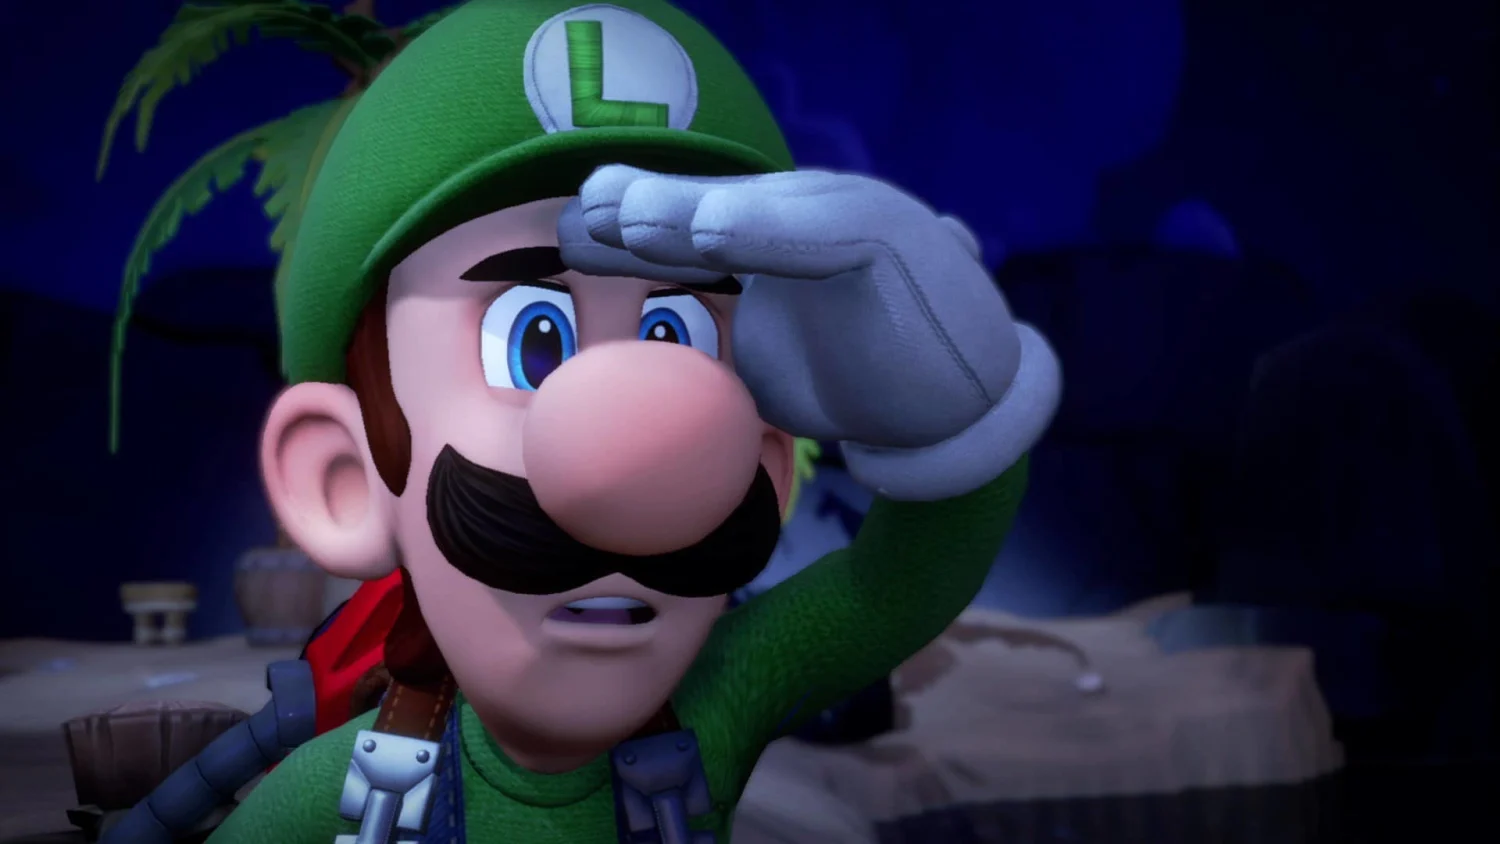 Jogo Luigi's Mansion 3 Nintendo Switch